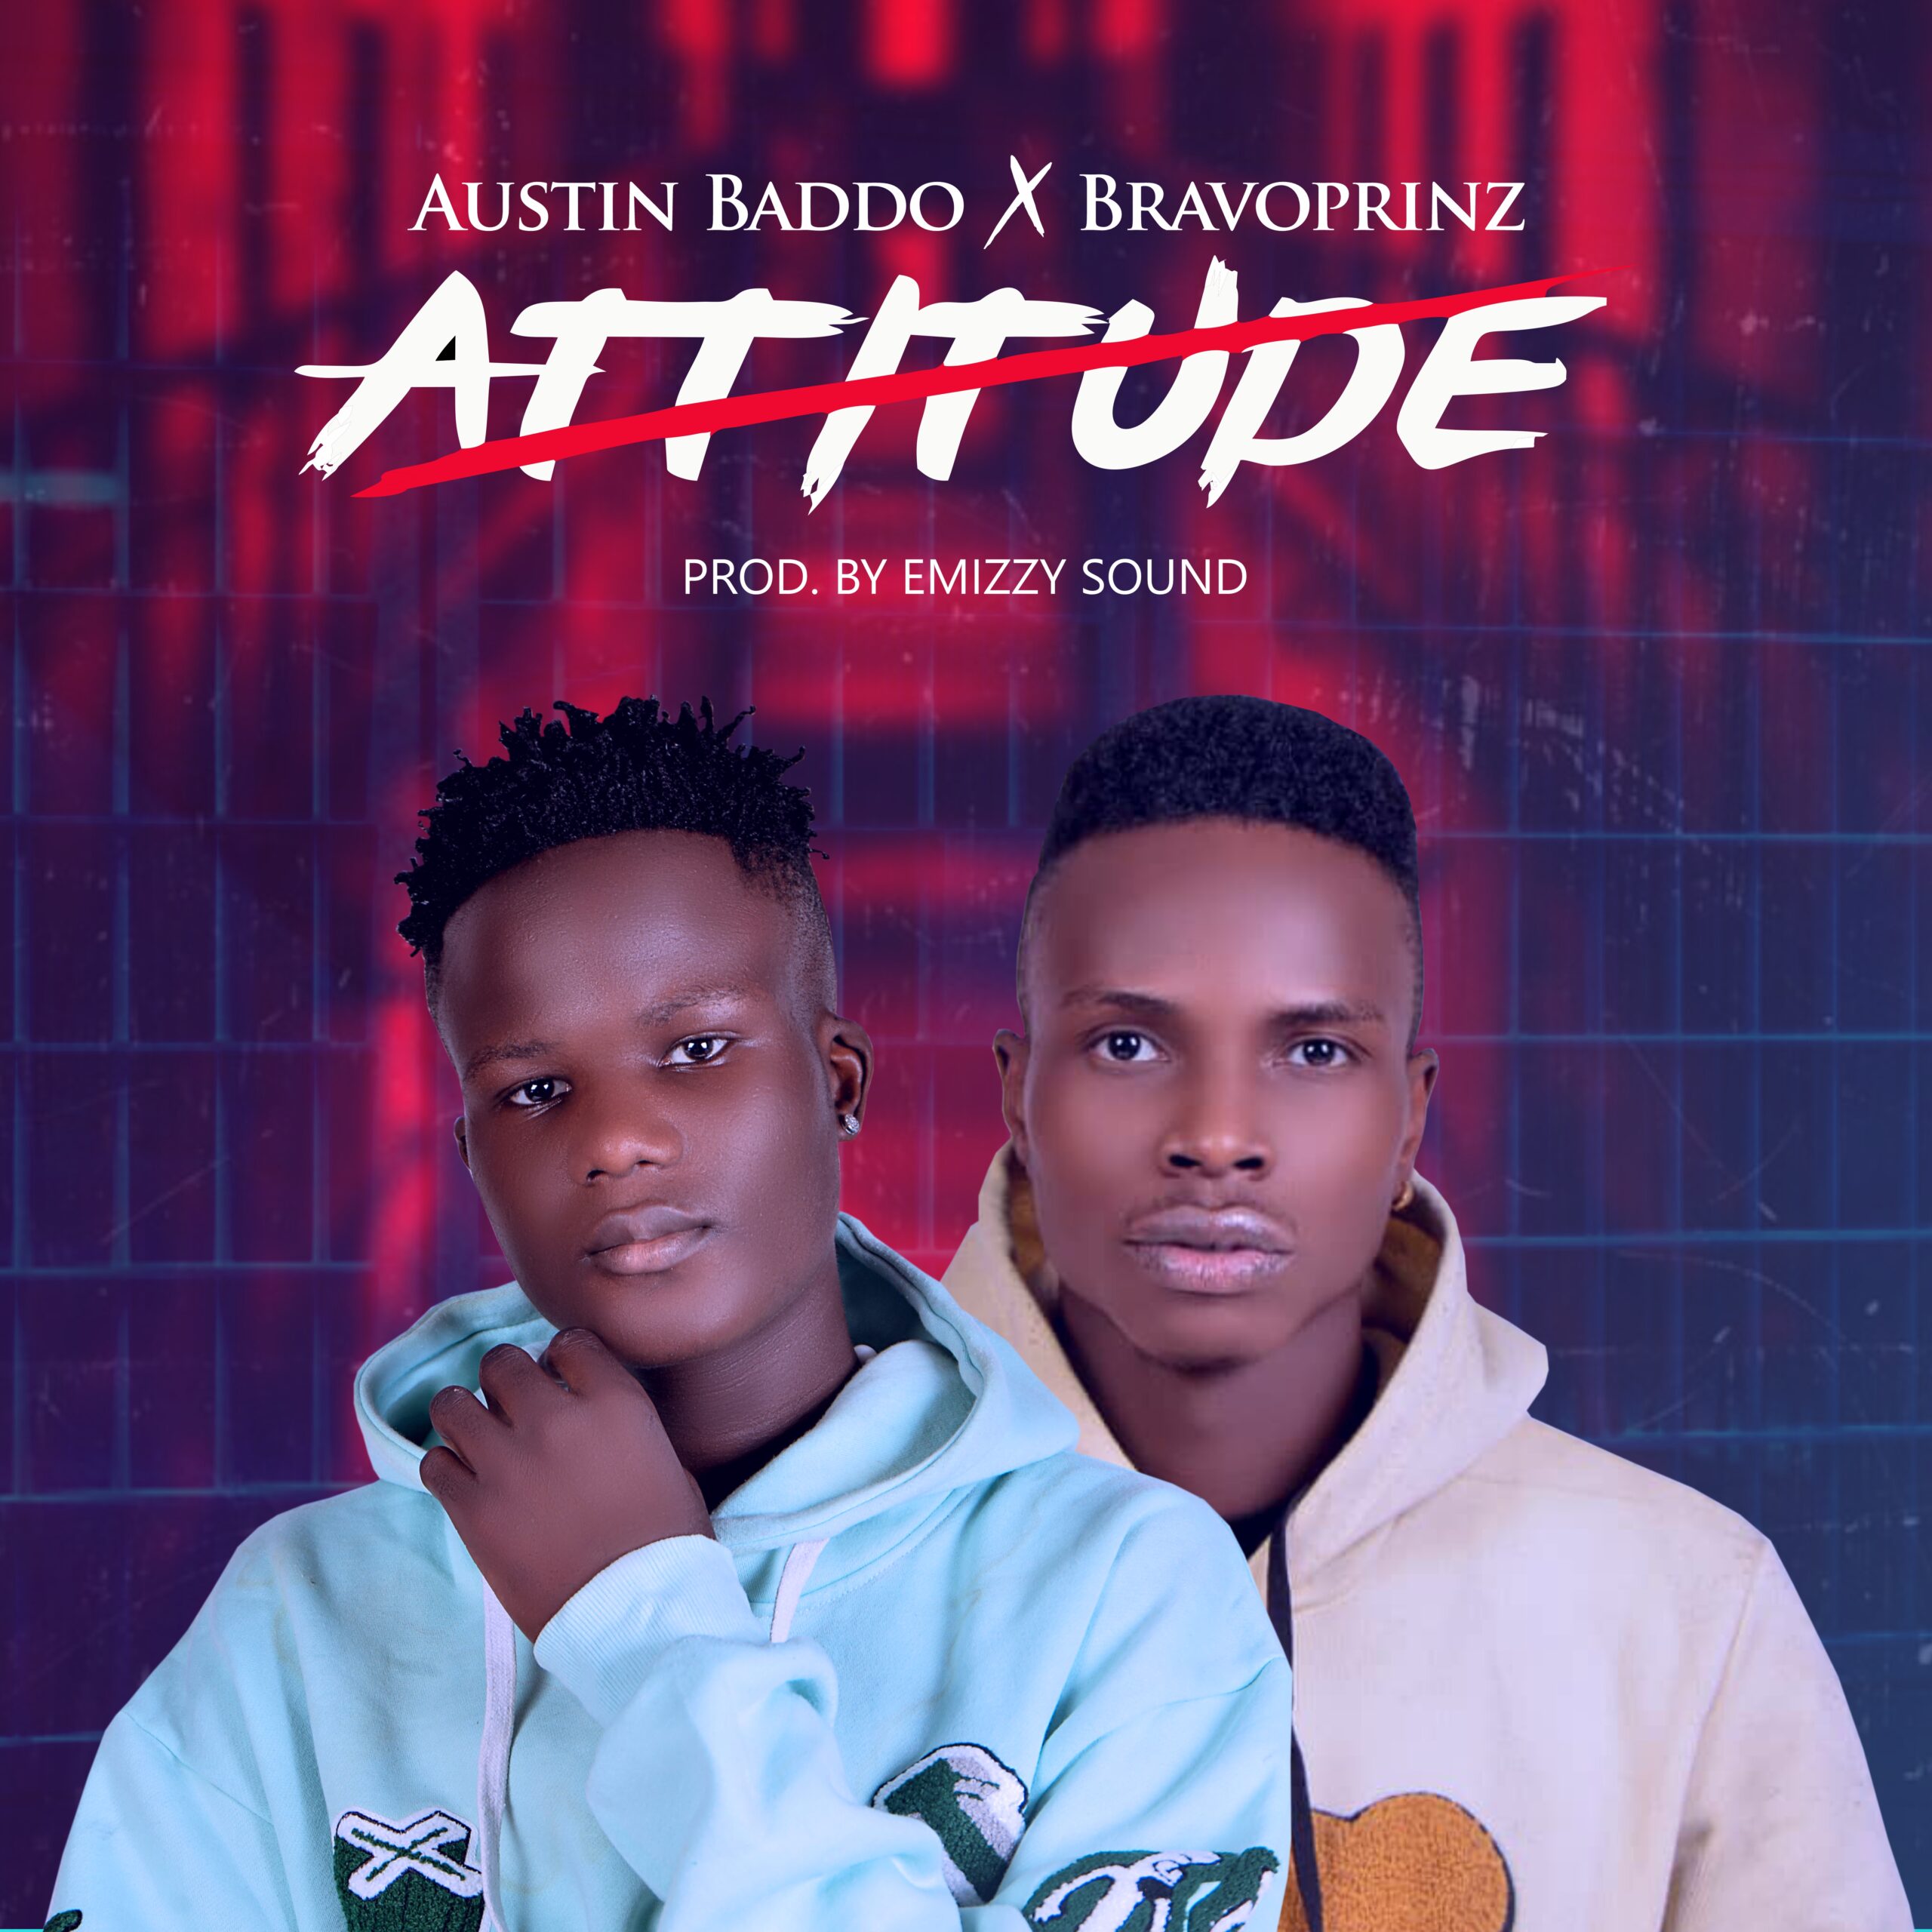 Listen & Download "ATTITUDE" by Austin Baddo Featuring Bravoprinz On Beatafrika For Free 79